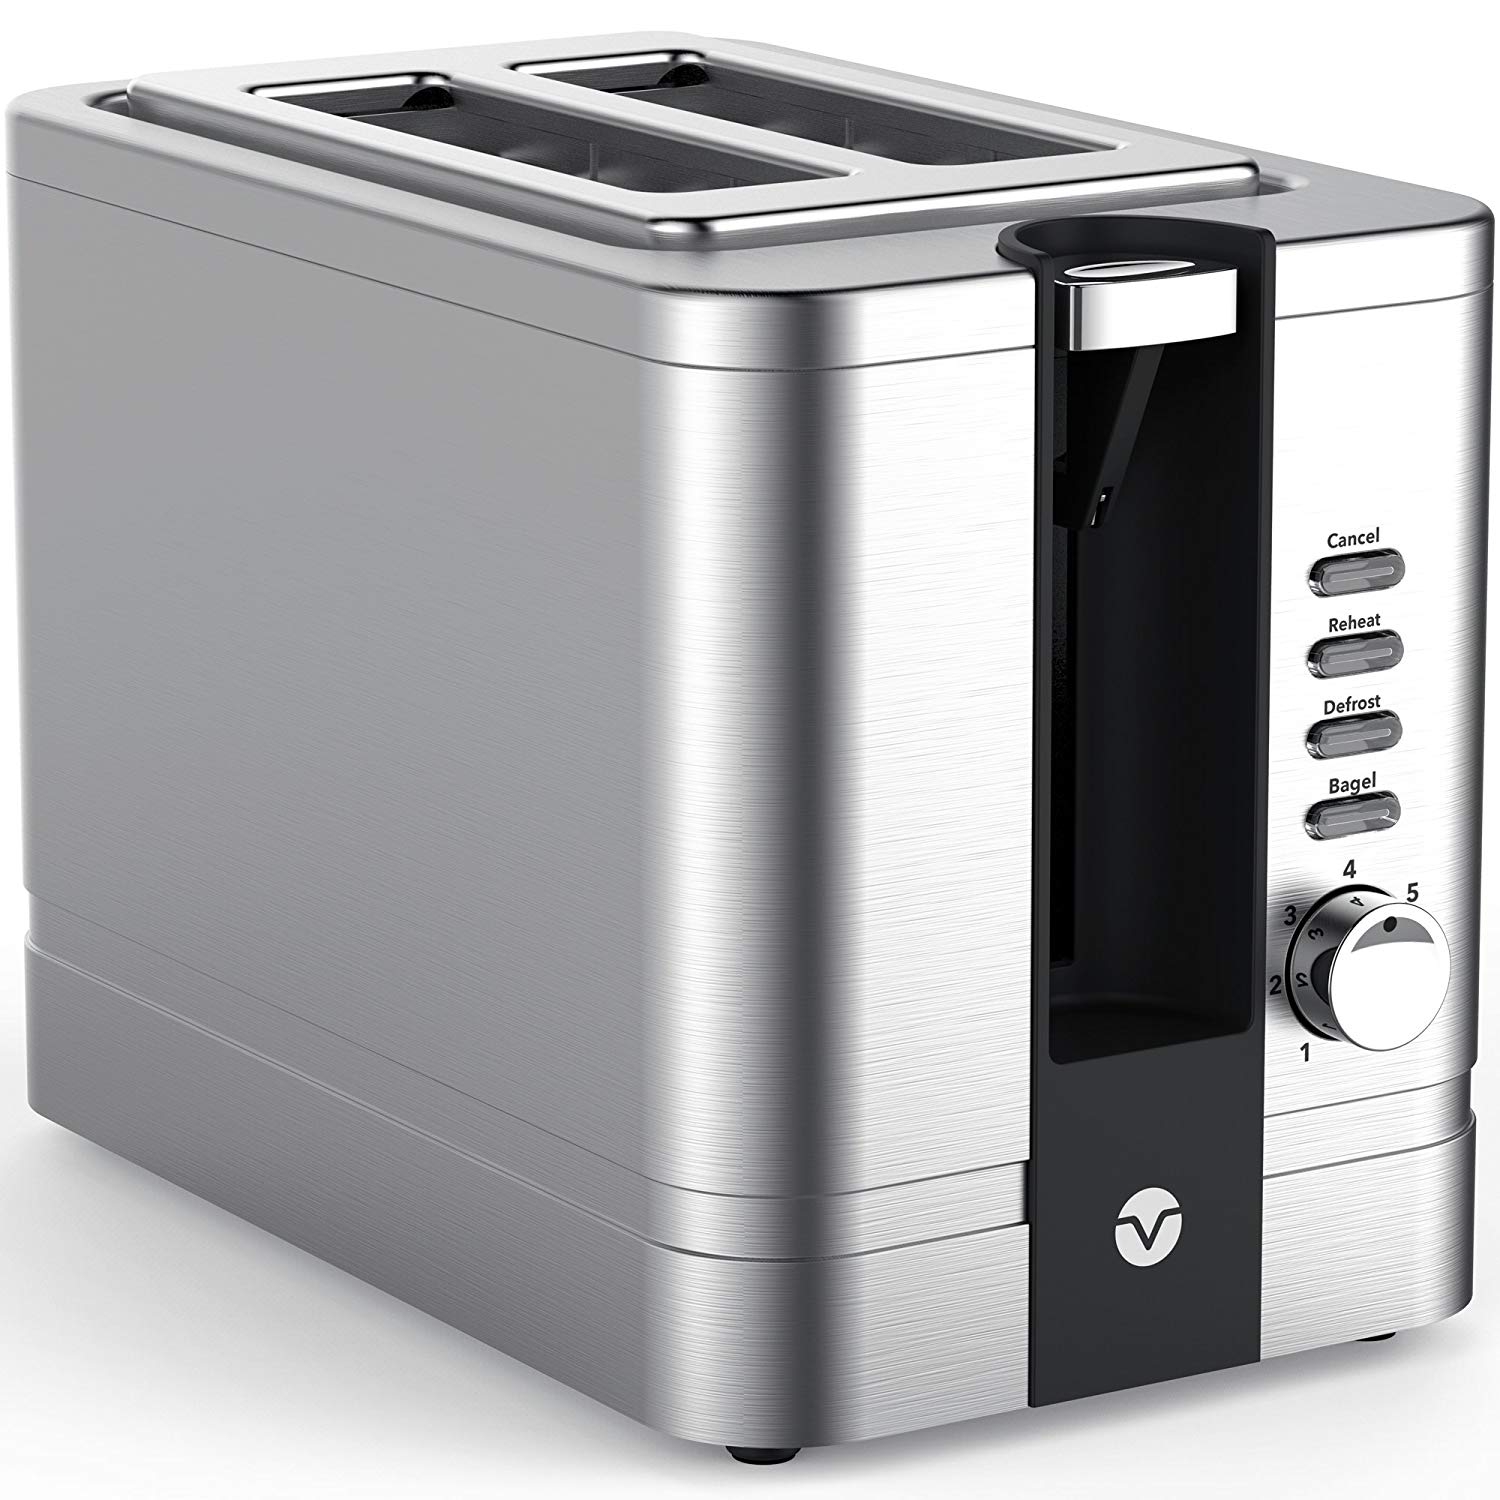 Vremi Temperature Control Retro Toaster, 2-Slice